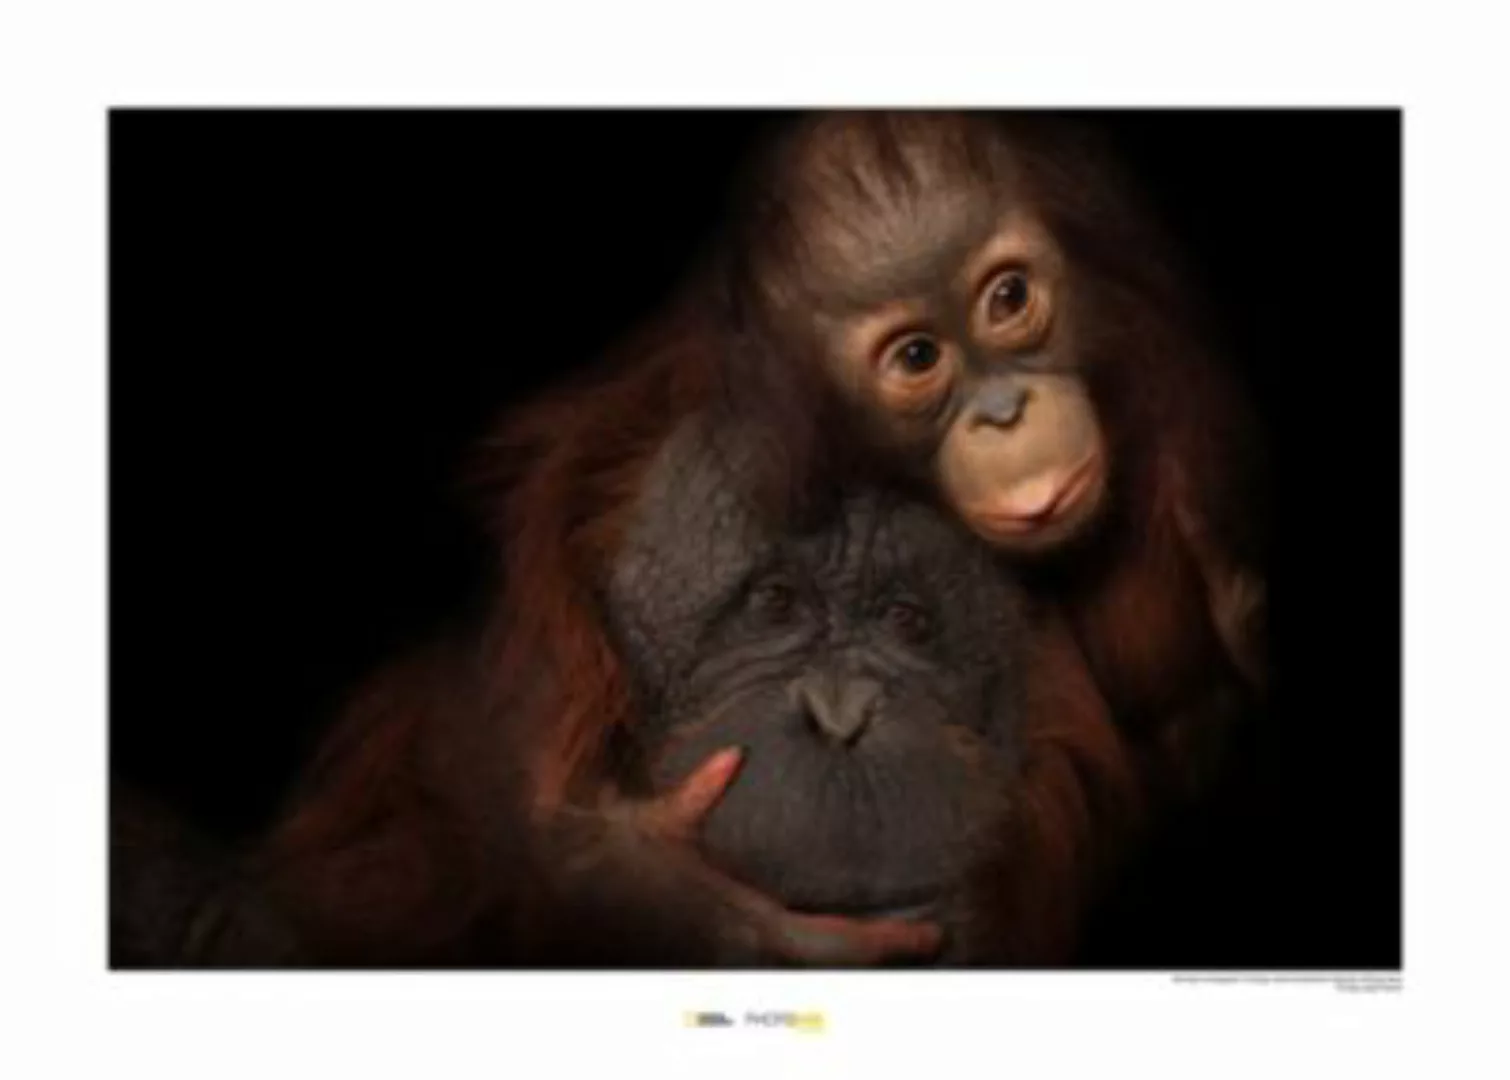 KOMAR Wandbild - Bornean Orangutan - Größe: 70 x 50 cm mehrfarbig Gr. one s günstig online kaufen